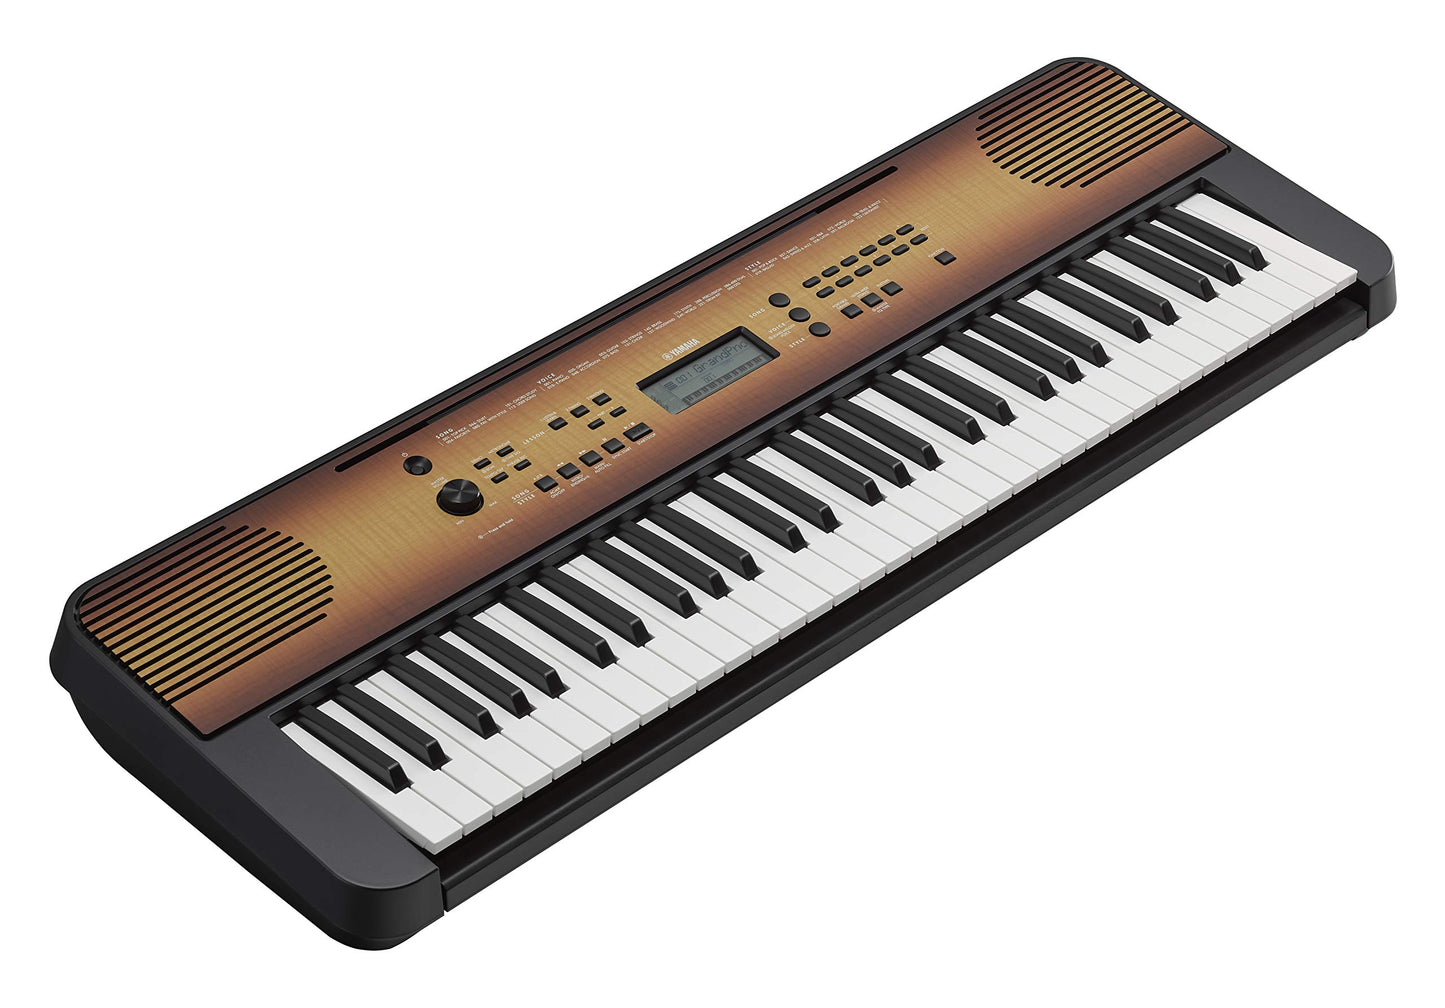 Yamaha PSRE360 61-Key Touch Sensitive Portable Keyboard with Power Supply, Maple Finish